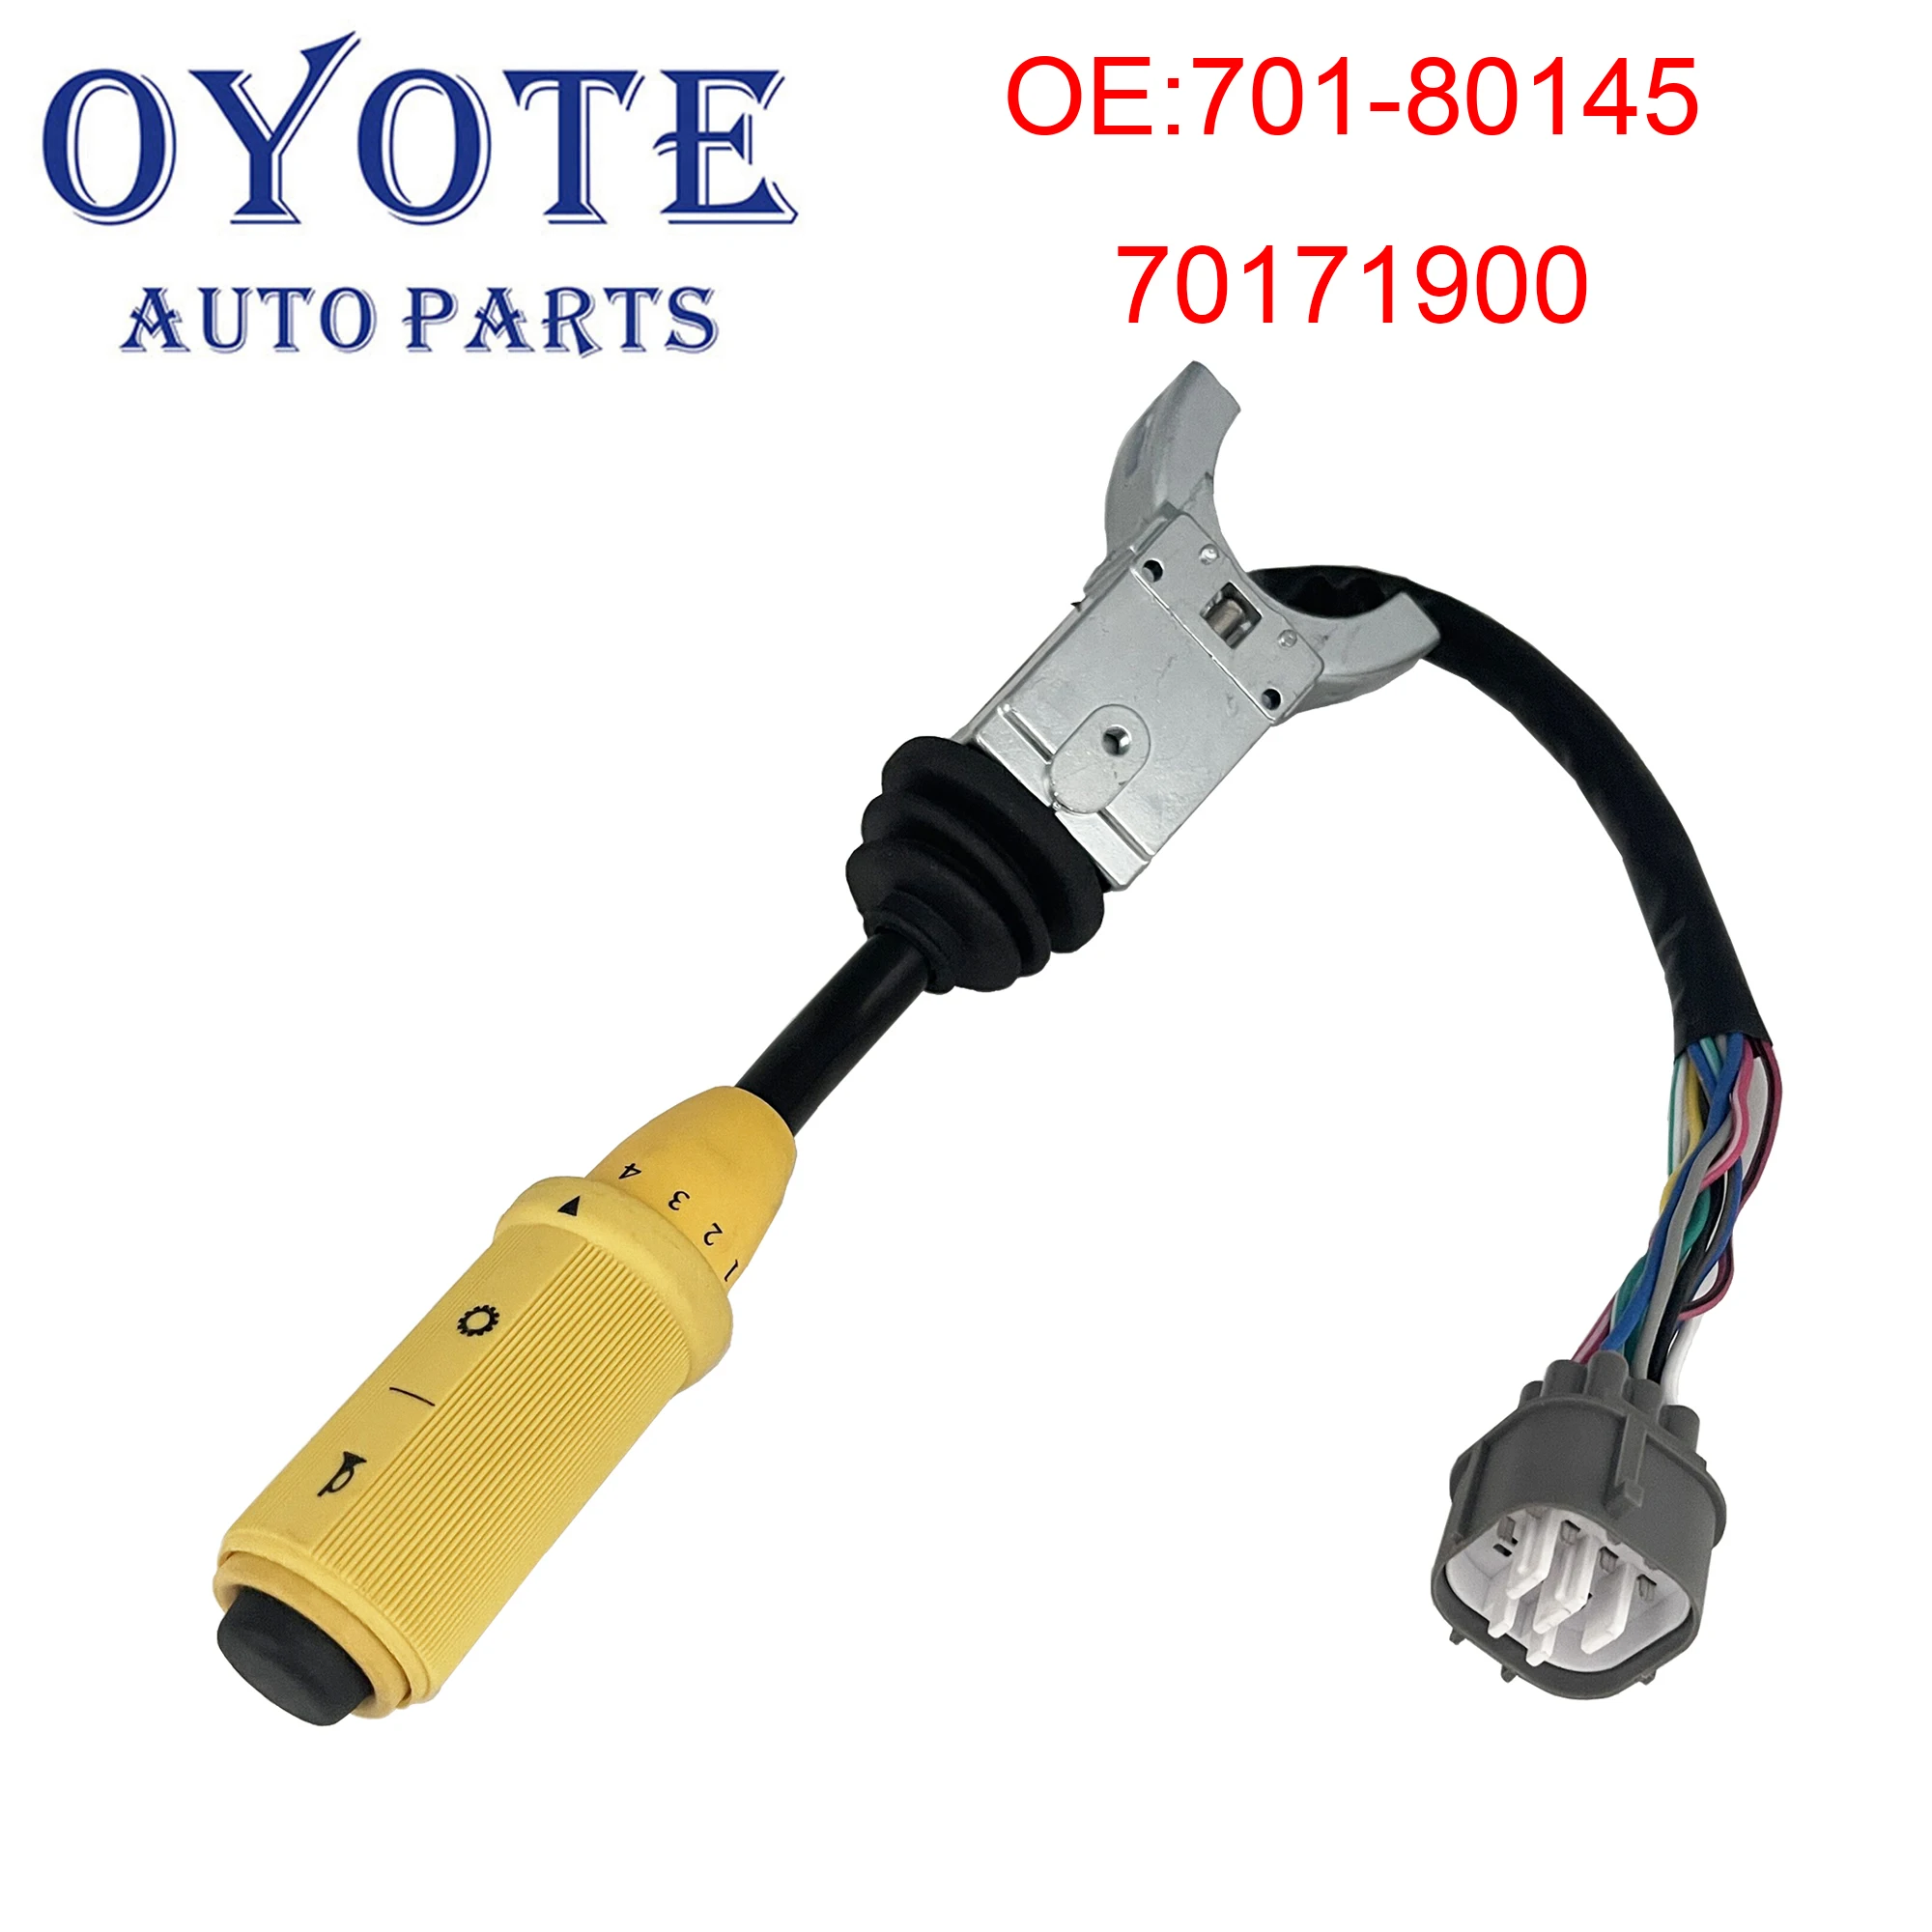 

OYOTE 701/80145 70171900 Forward Reverse Shuttle Lever Switch Power Shift For JCB Backhoe Loader 1400B 1550B 1600B 1700B